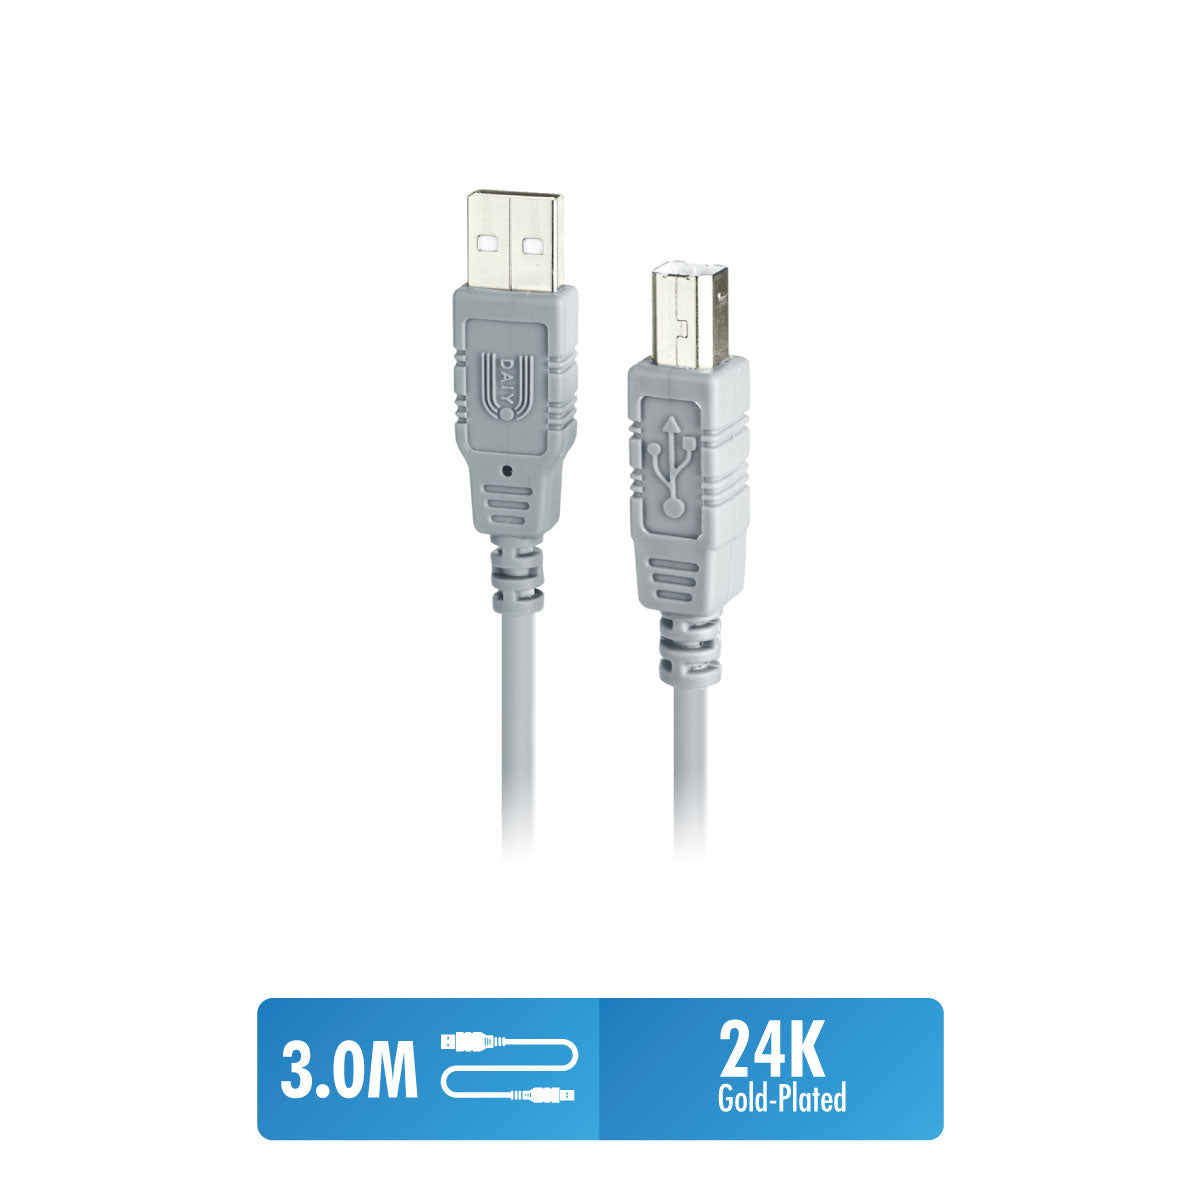 Daiyo CP 2502 USB 2.0 A Male to B Male Printer Cable 3m